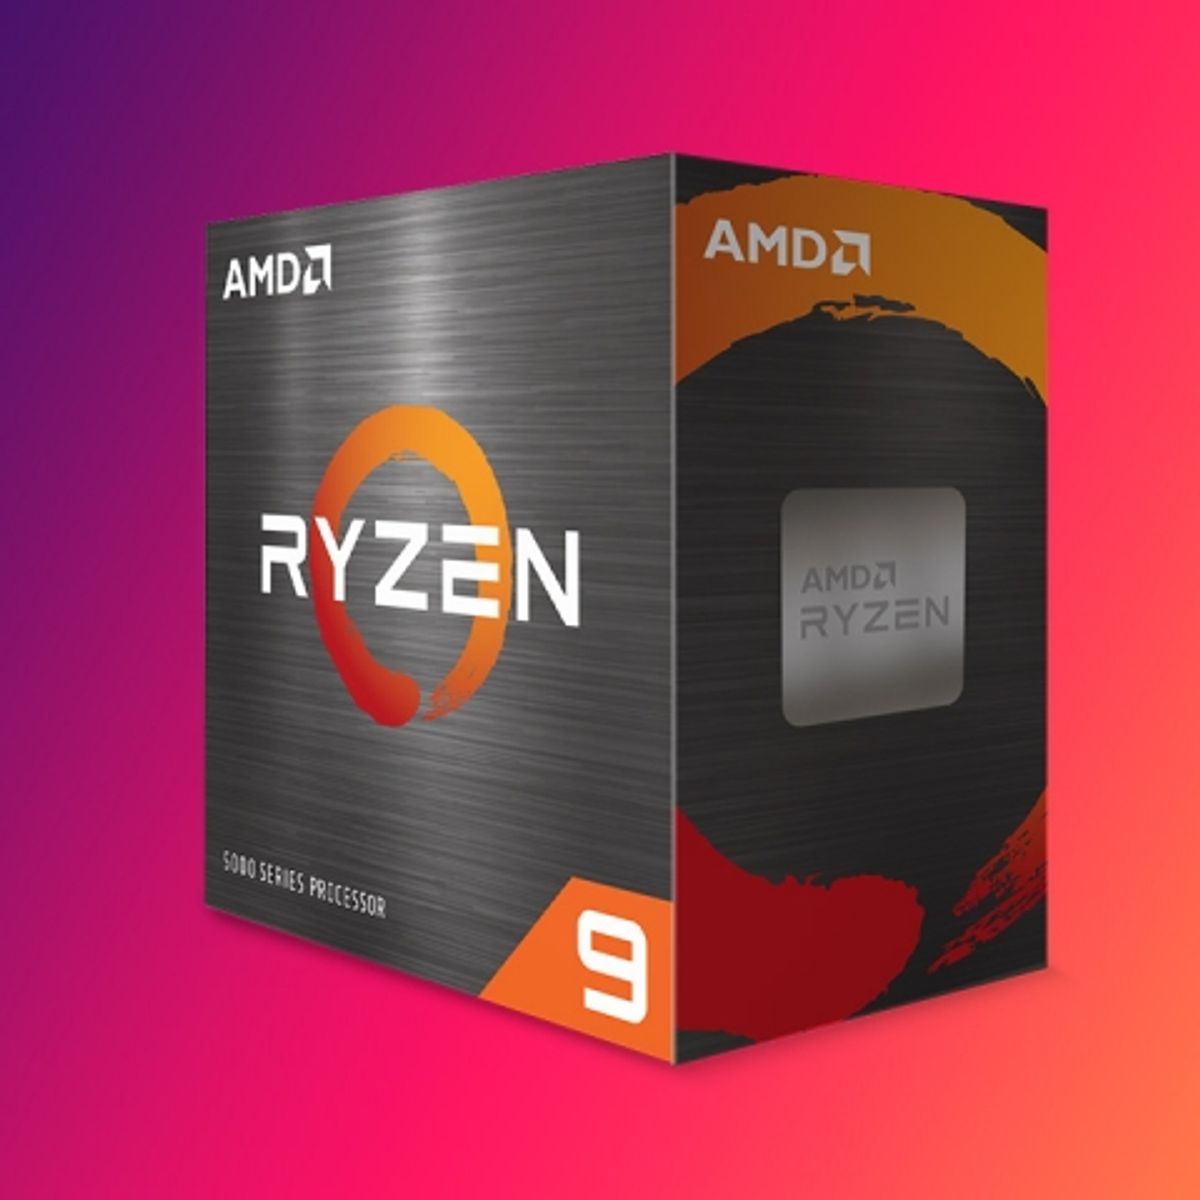 4. AMD Ryzen 9 5950X